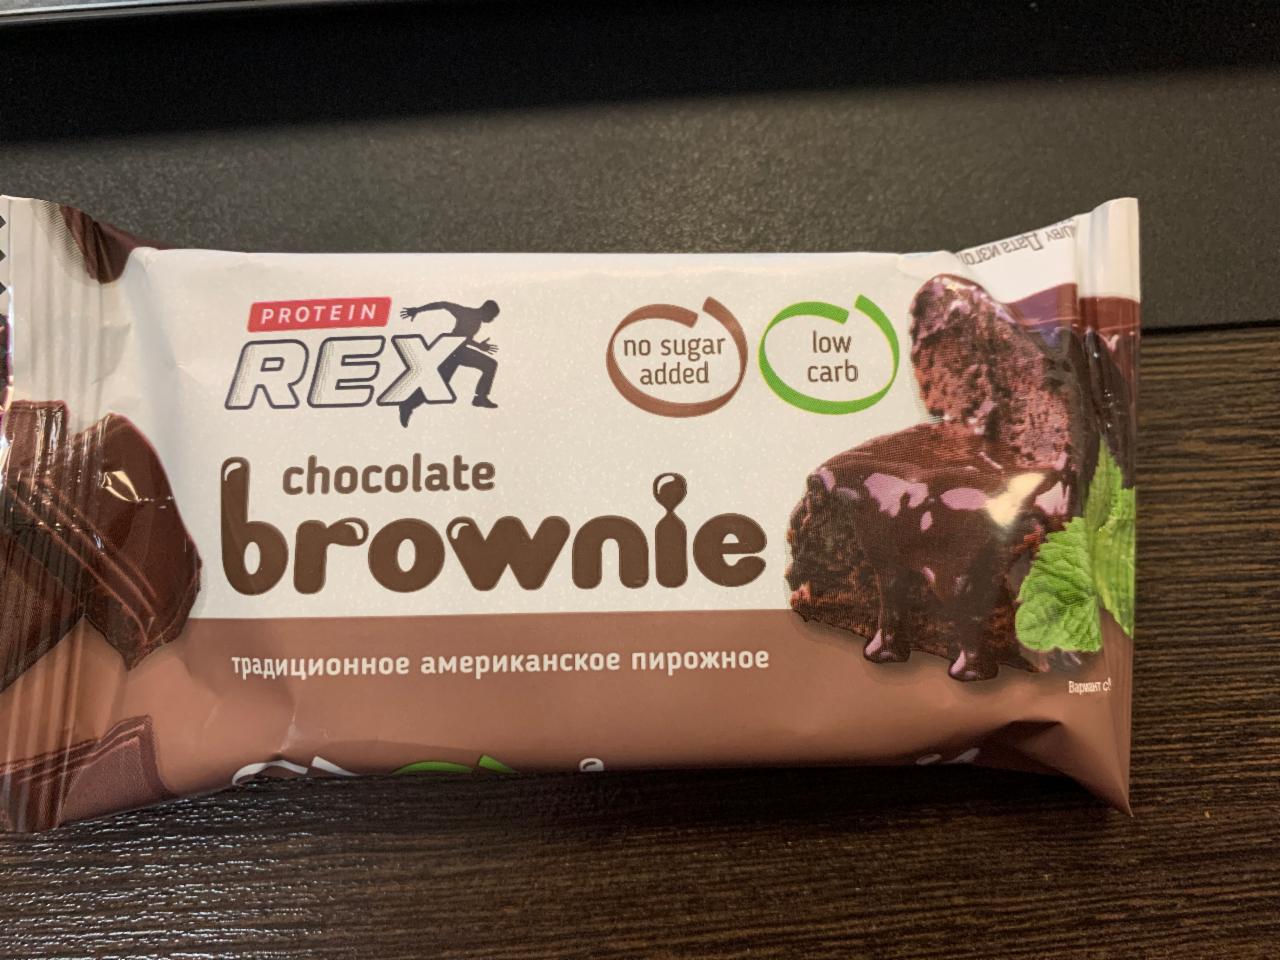 Protein rex брауни. Пирожное Protein Rex Brownie. Protein Rex Tiramisu пирожное. Protein Rex Chocolate Brownie пирожное с вишней 50 гр..